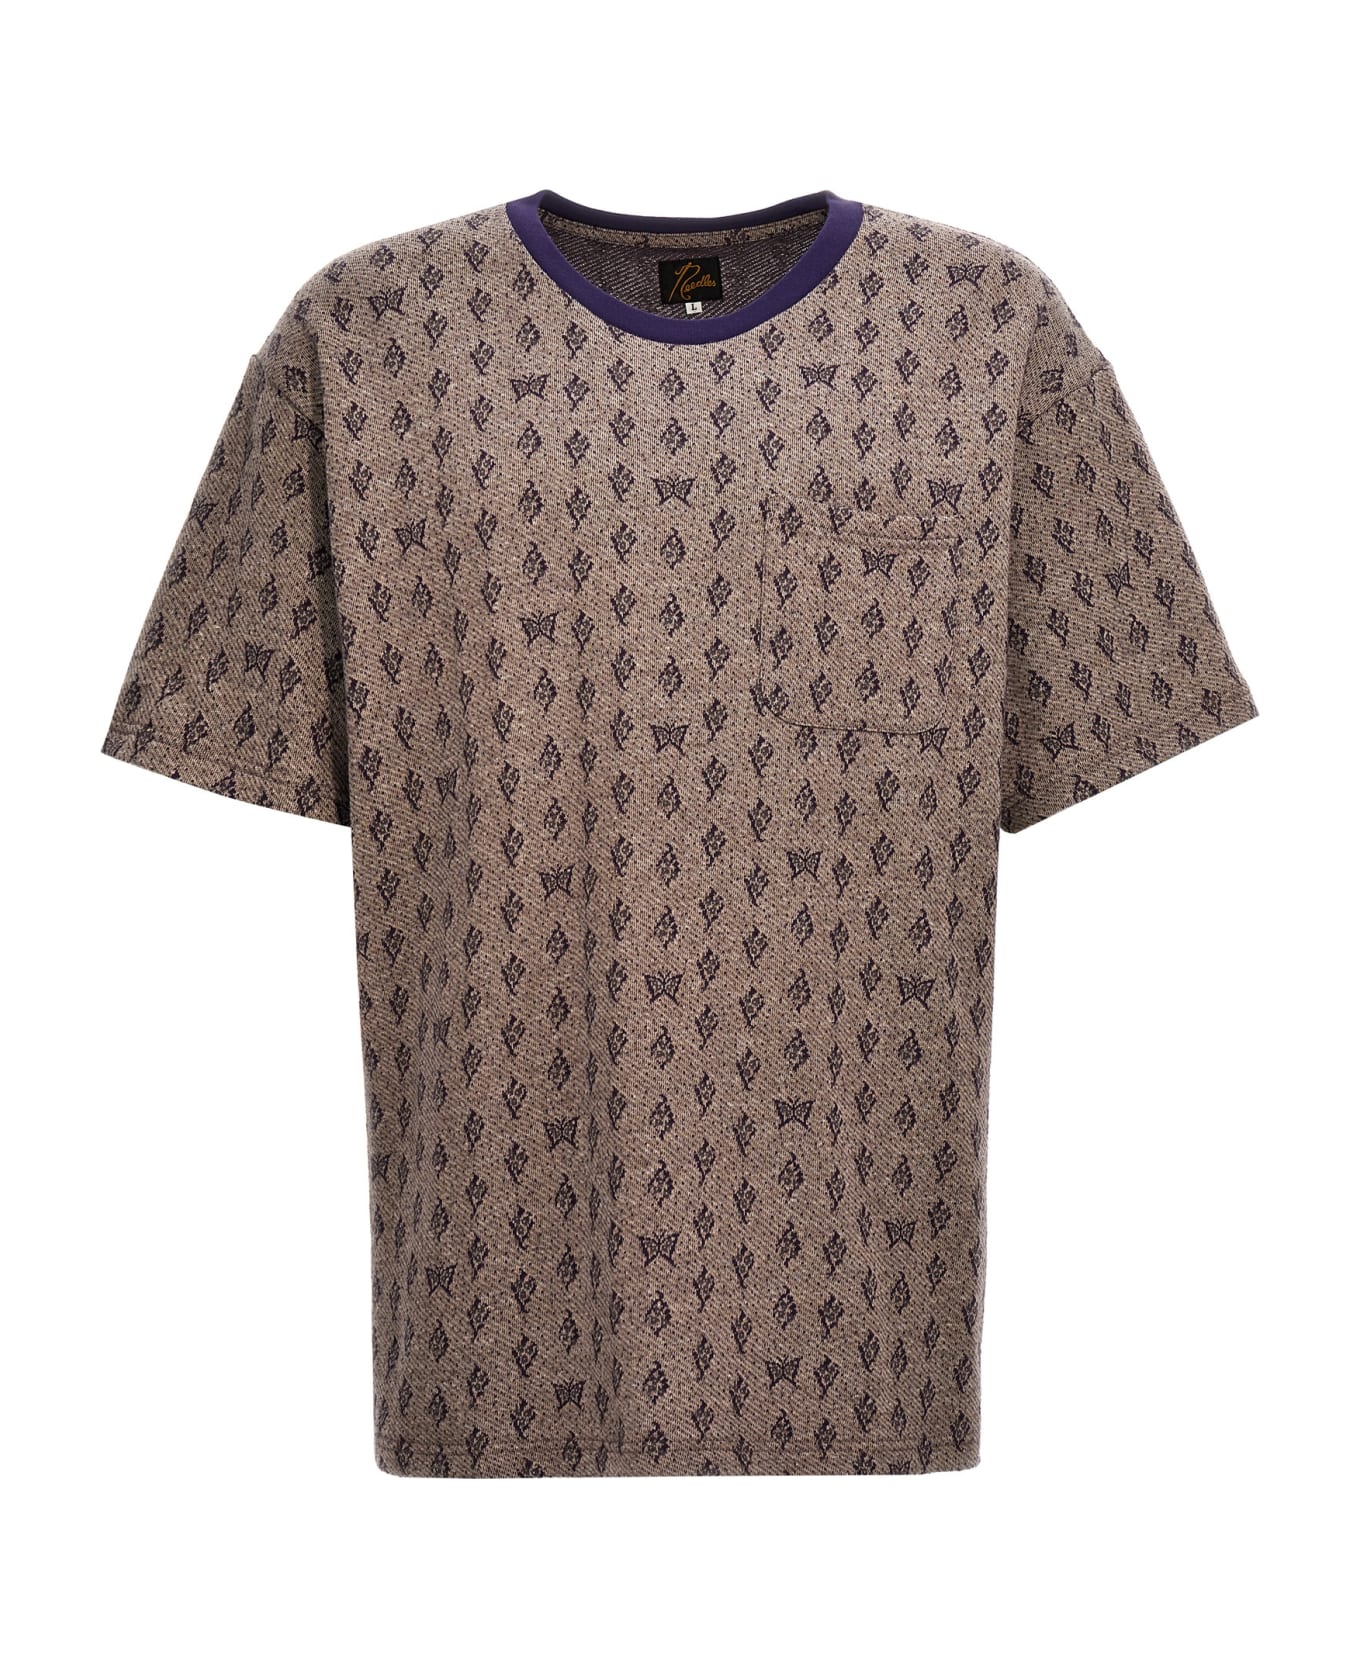 Needles Jacquard Patterned T-shirt - Purple シャツ